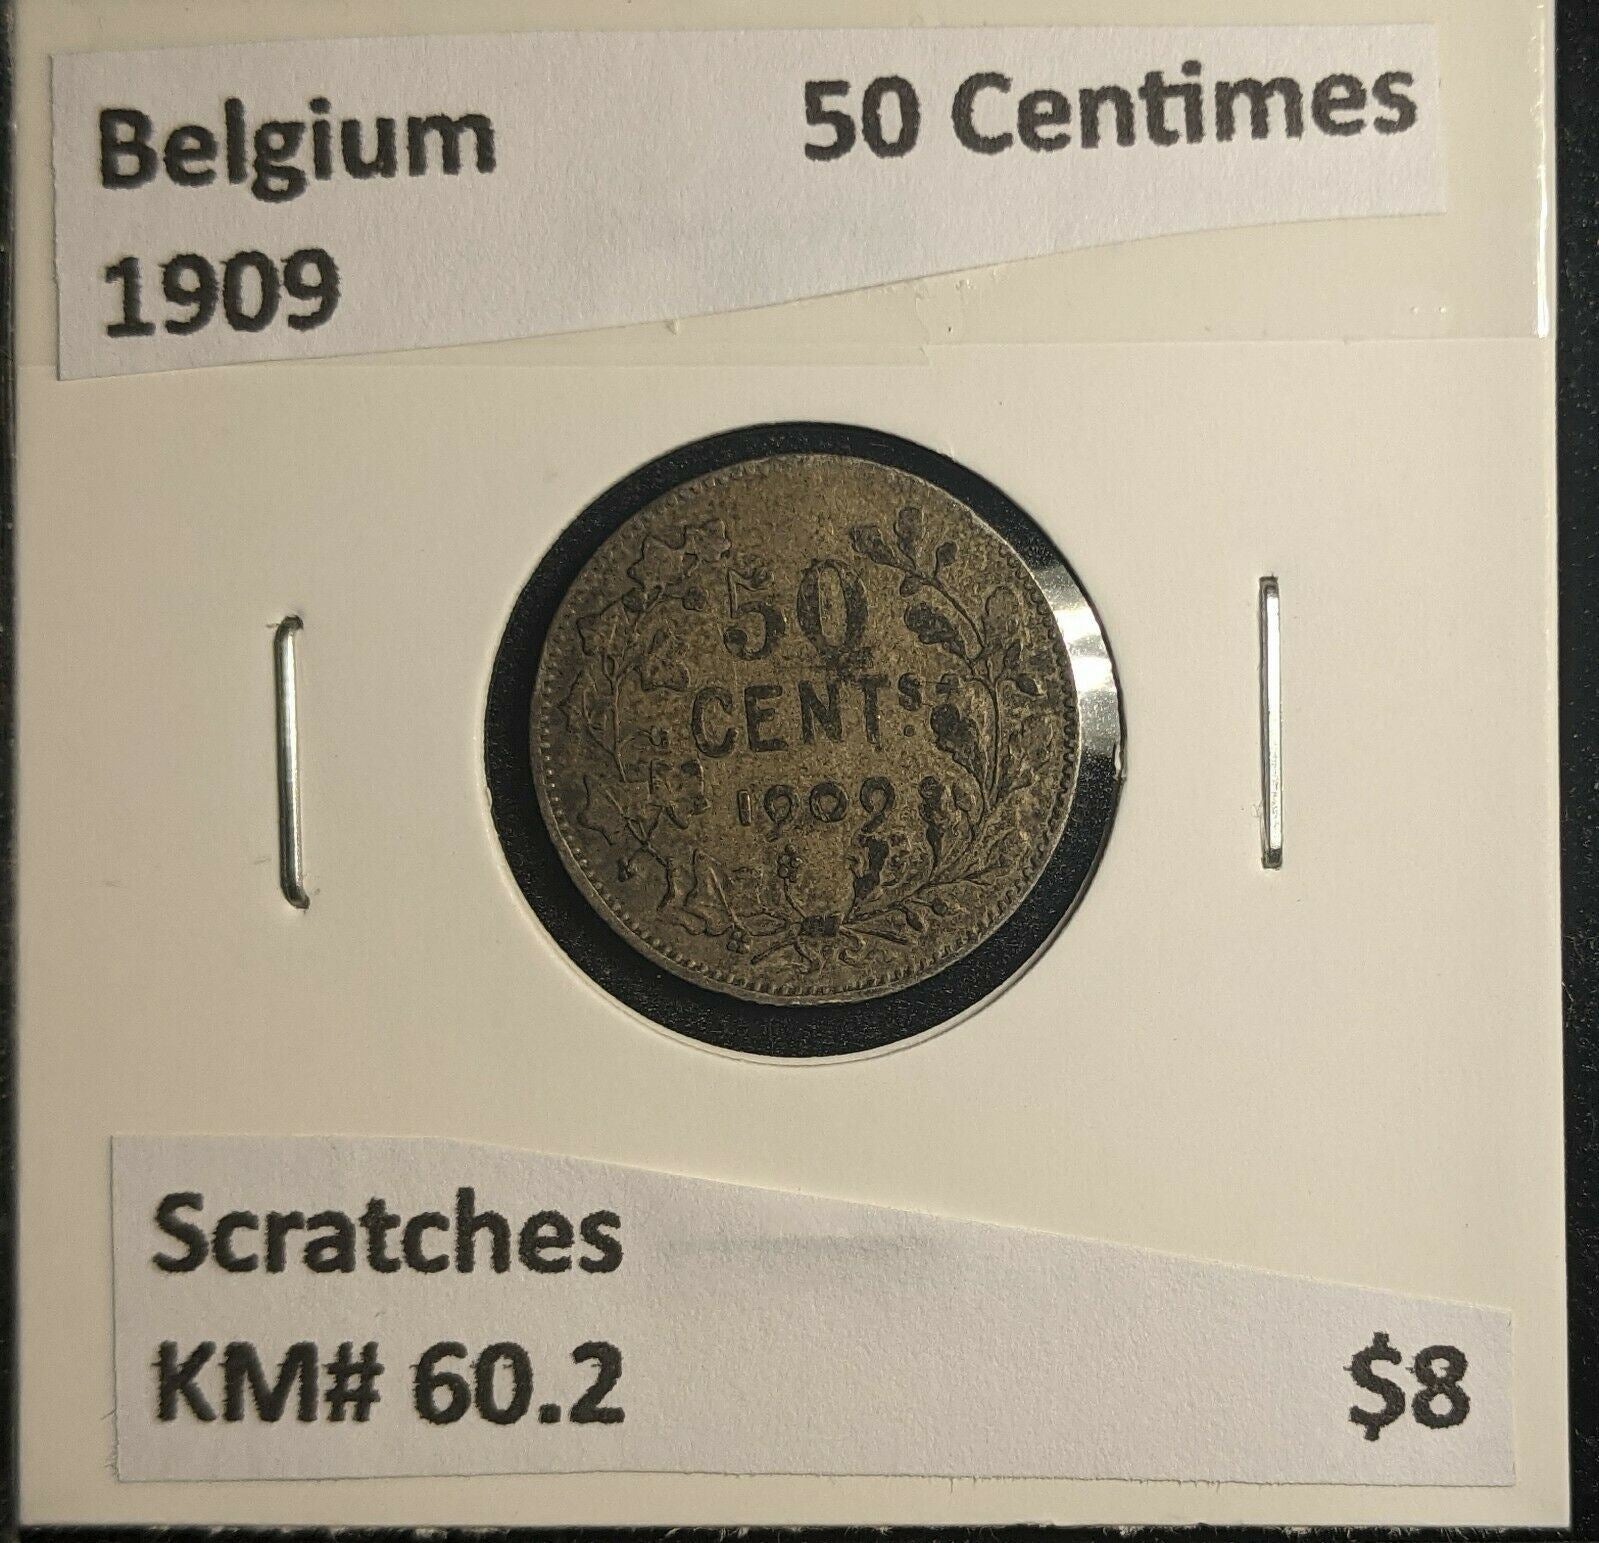 Belgium 1909 50 Centimes KM# 60.2 Scratches #625 6A